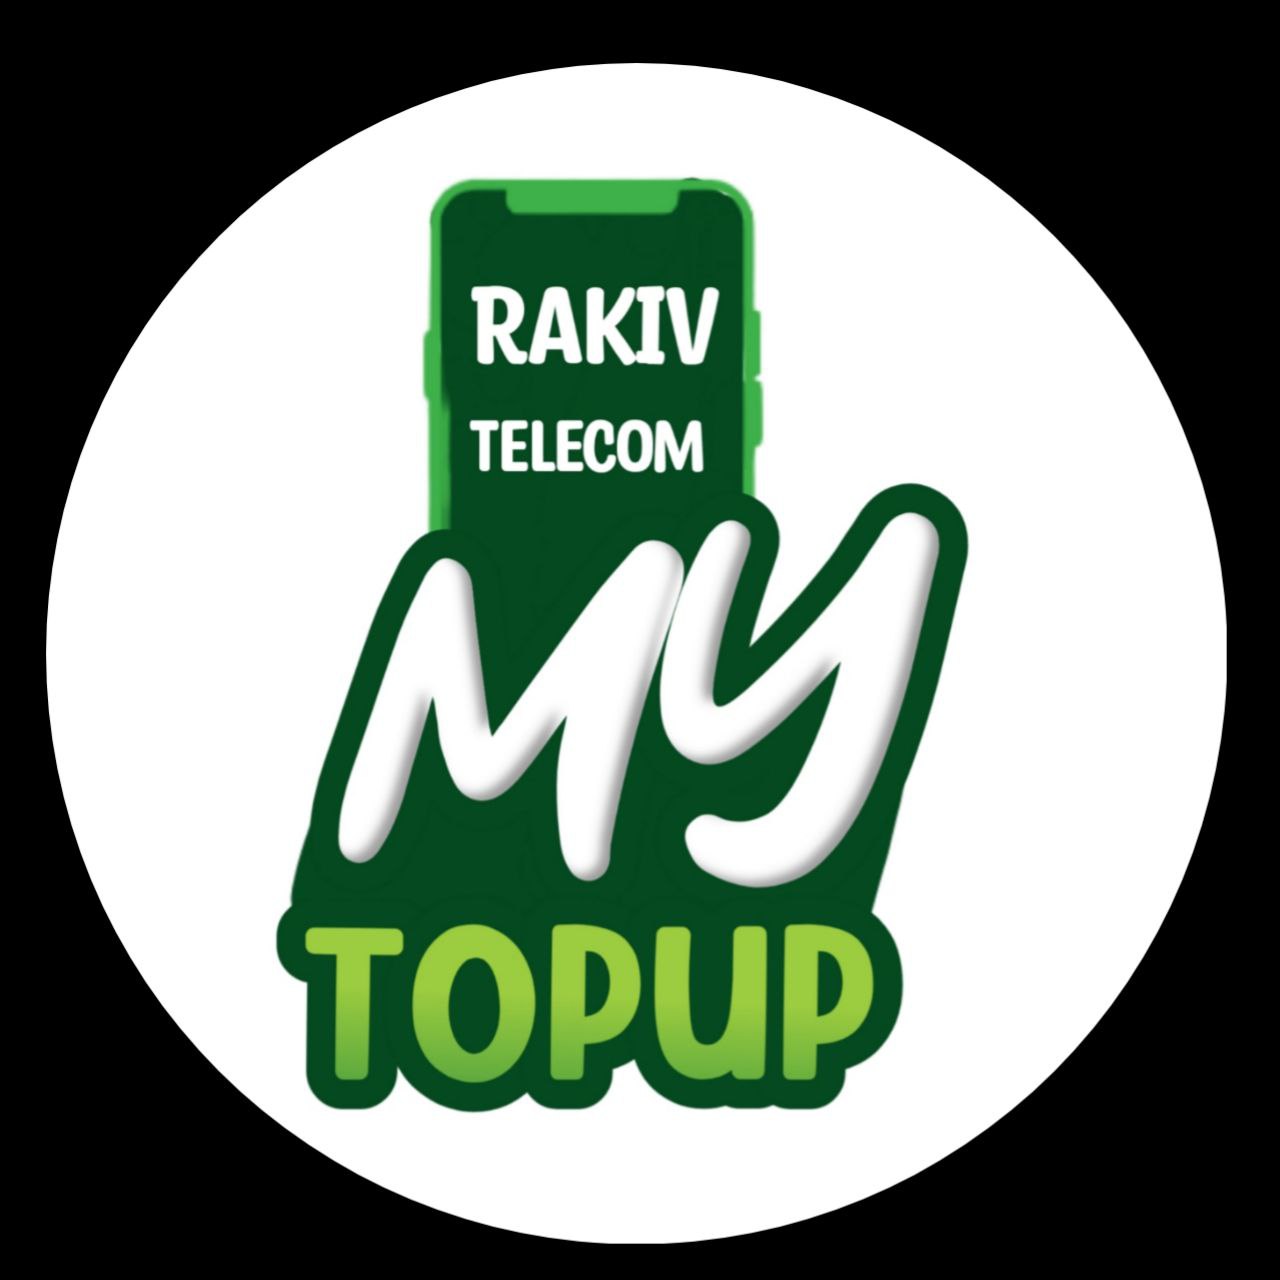 Rakiv Telecom